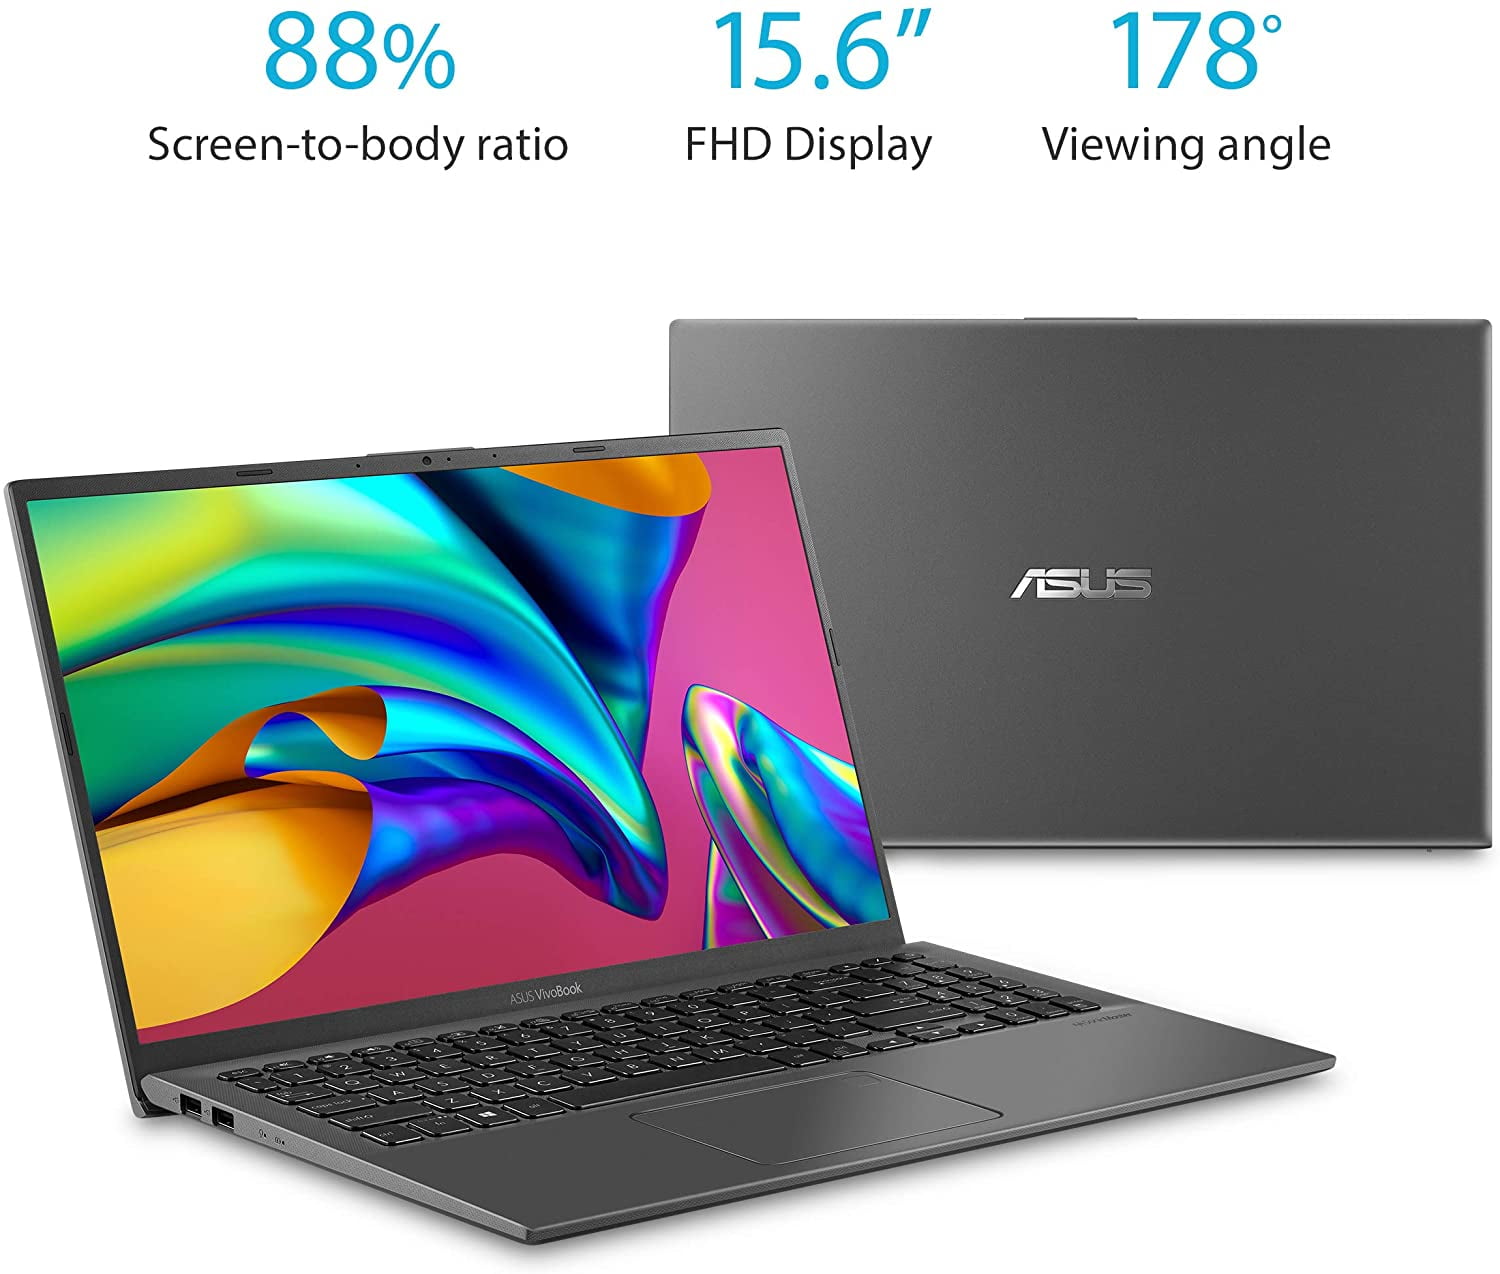 ASUS VivoBook 15 and Light Laptop, 15.6” FHD, Intel CPU, 8GB RAM, 128GB SSD, Backlit KB, Fingerprint, Windows 10 Home in S Slate Gray - Walmart.com